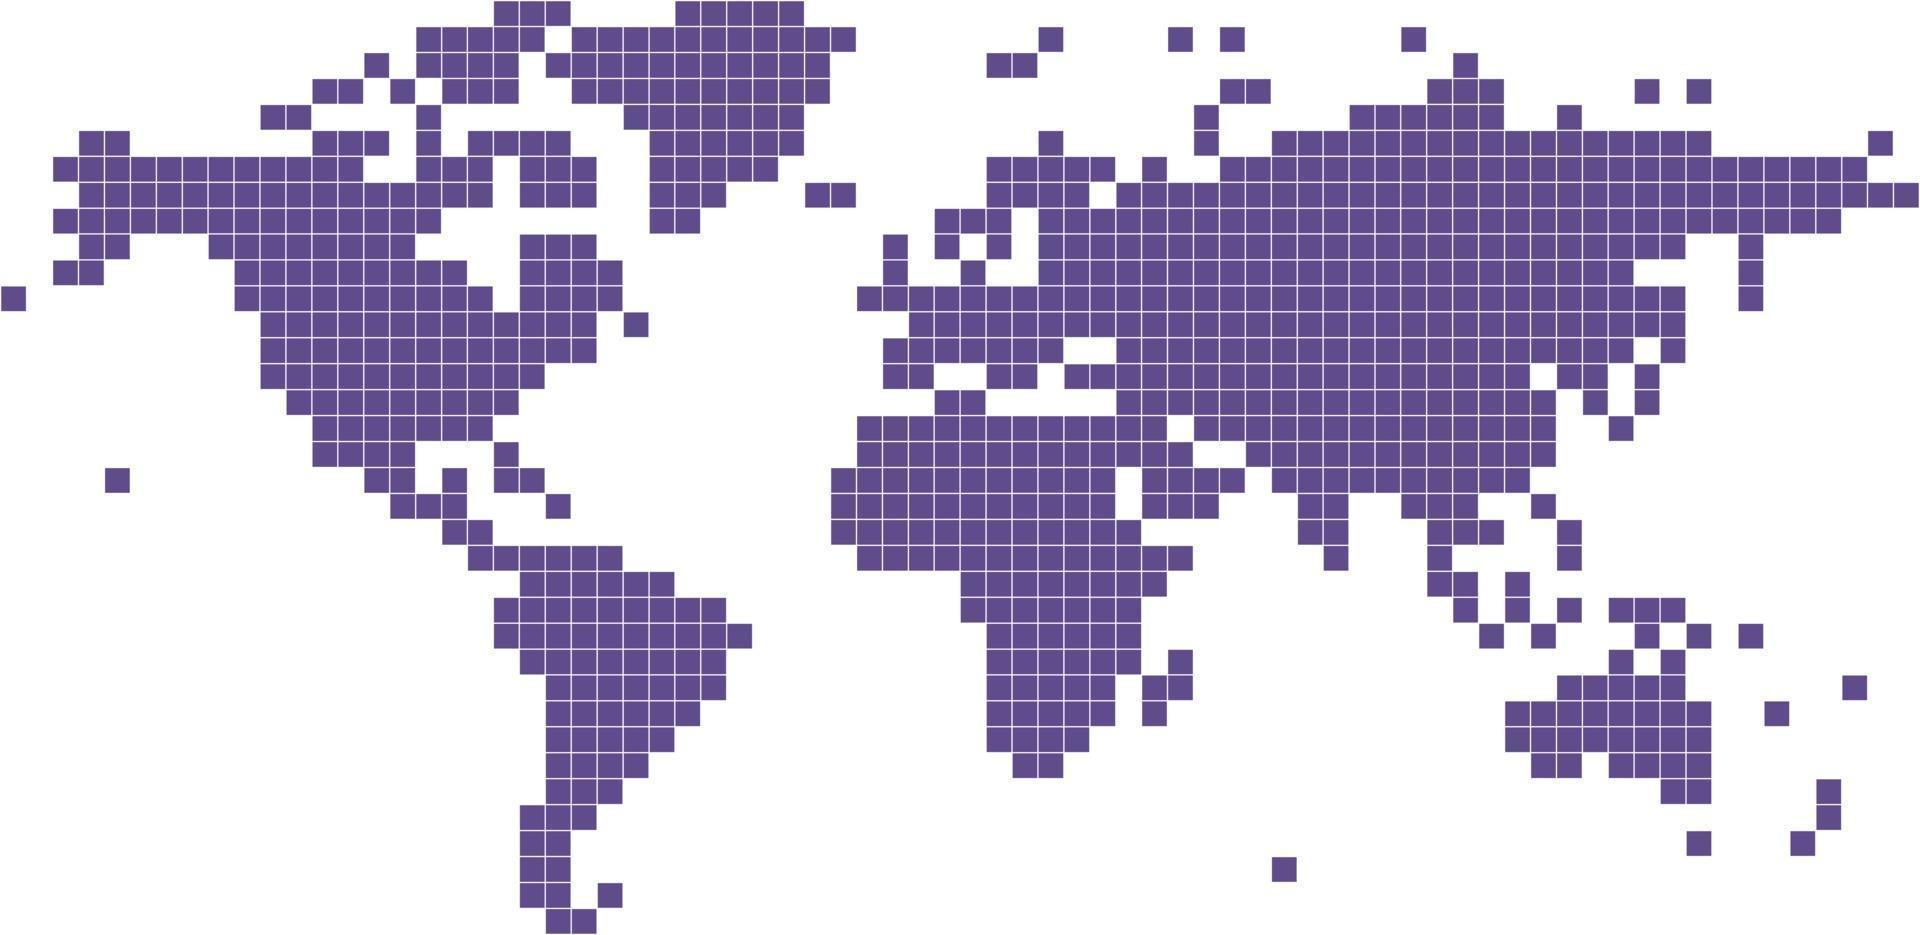 violette vierkante vorm wereldkaart op witte achtergrond vector